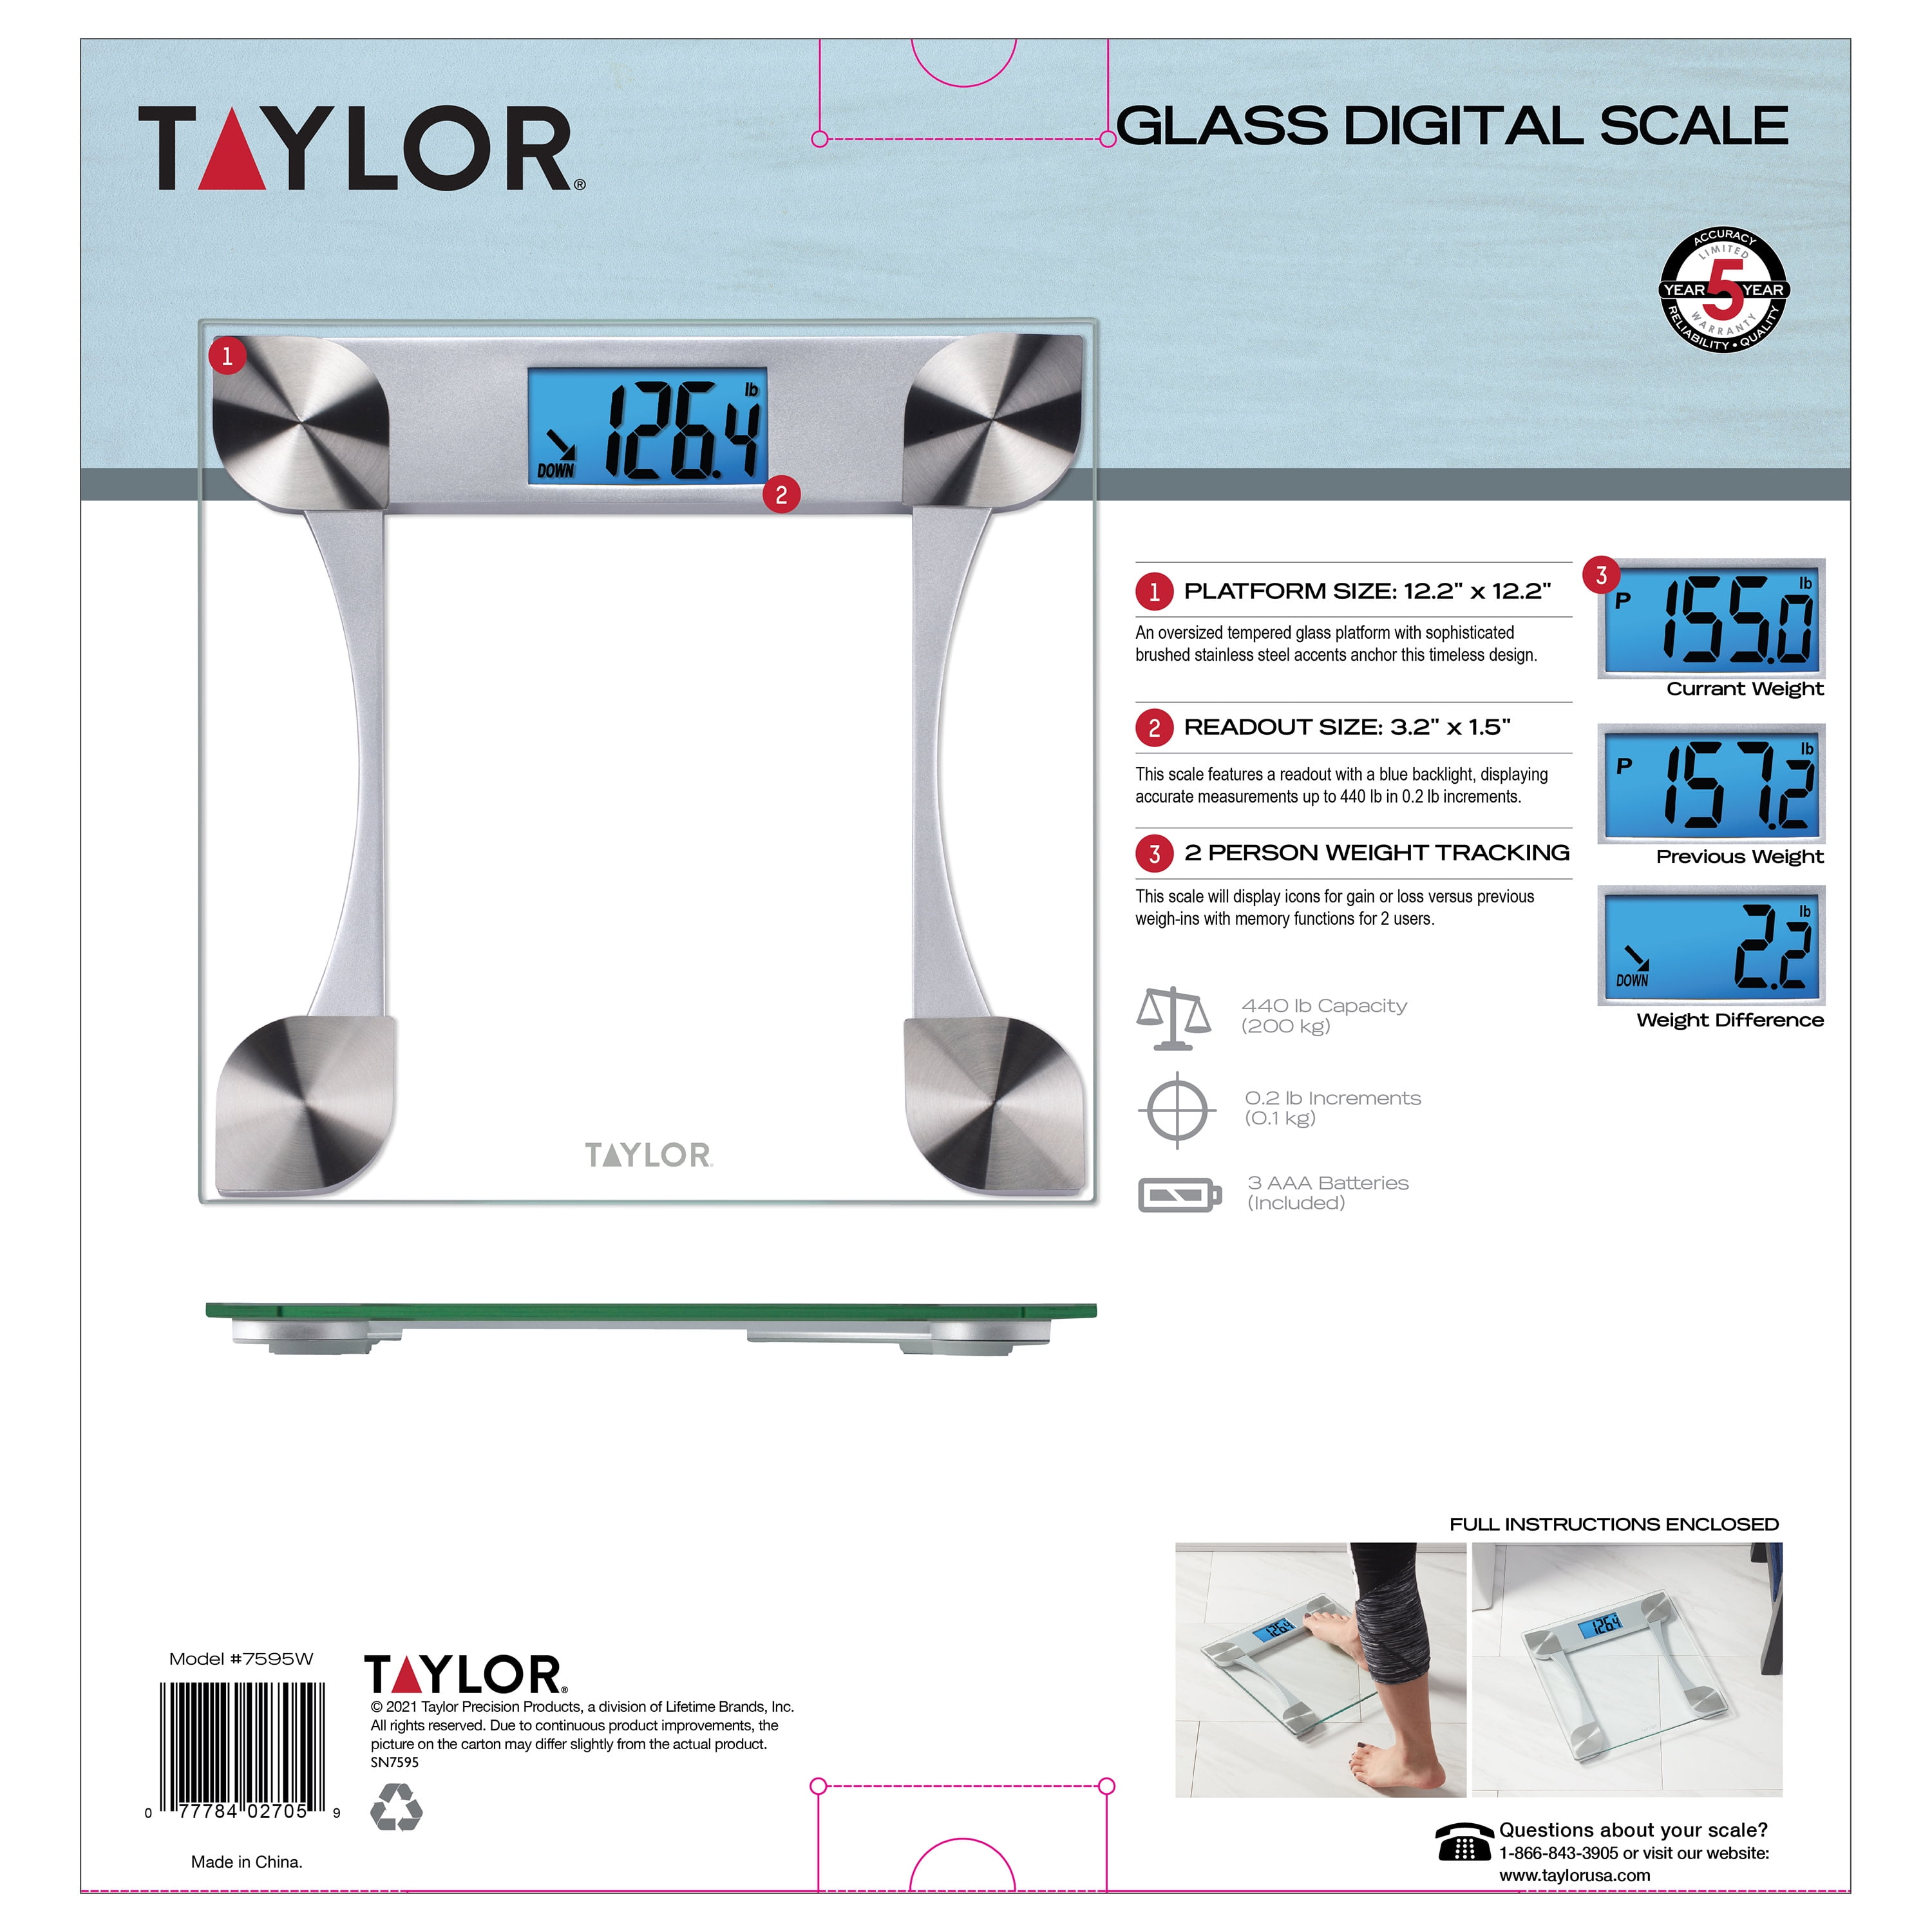 Taylor Digital Glass Bathroom Scale with Backlit Display 440lb